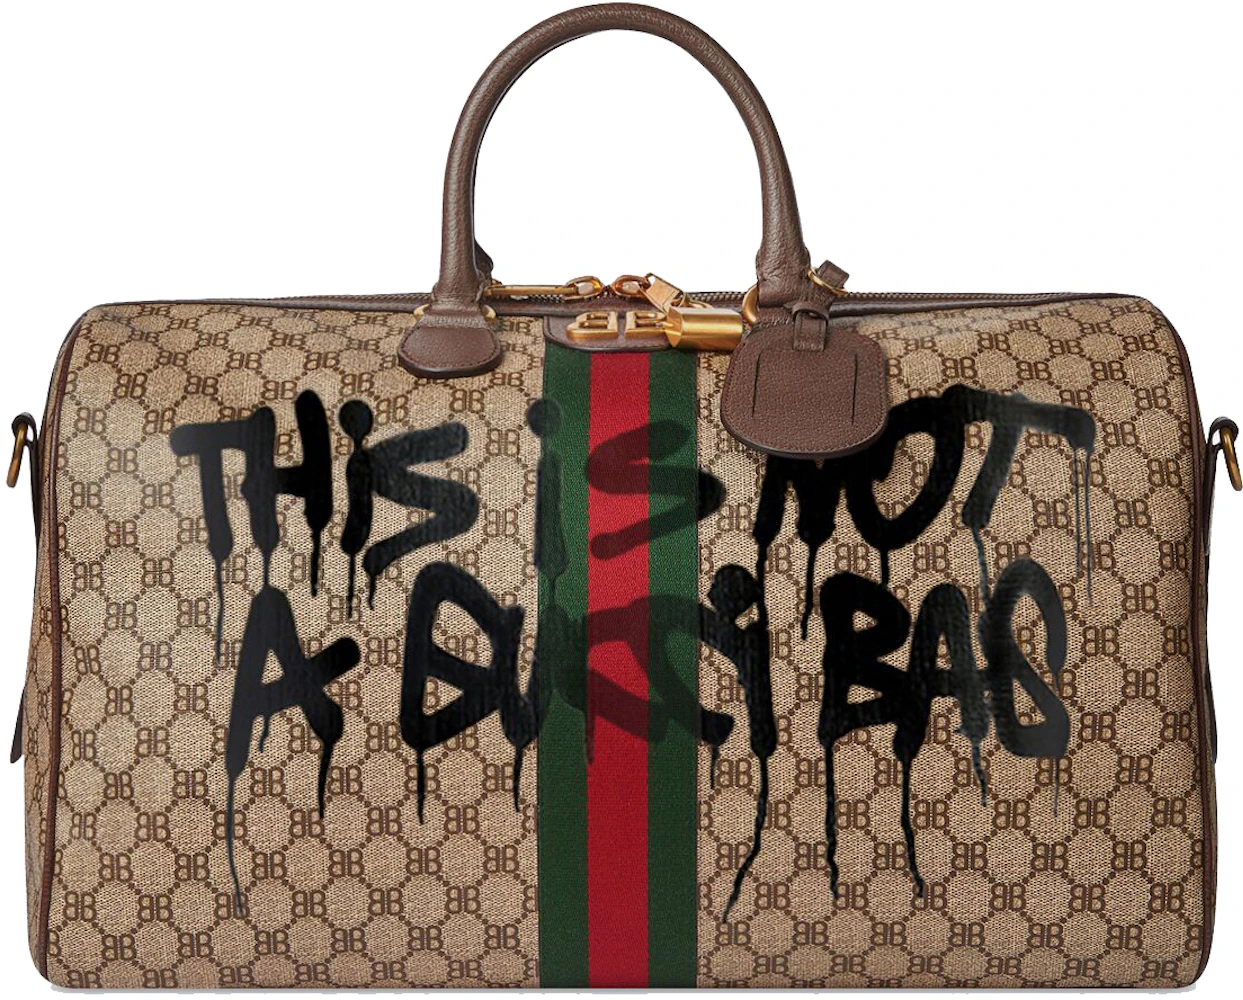 Gucci x Balenciaga The Hacker Project Medium Tote Bag Black in